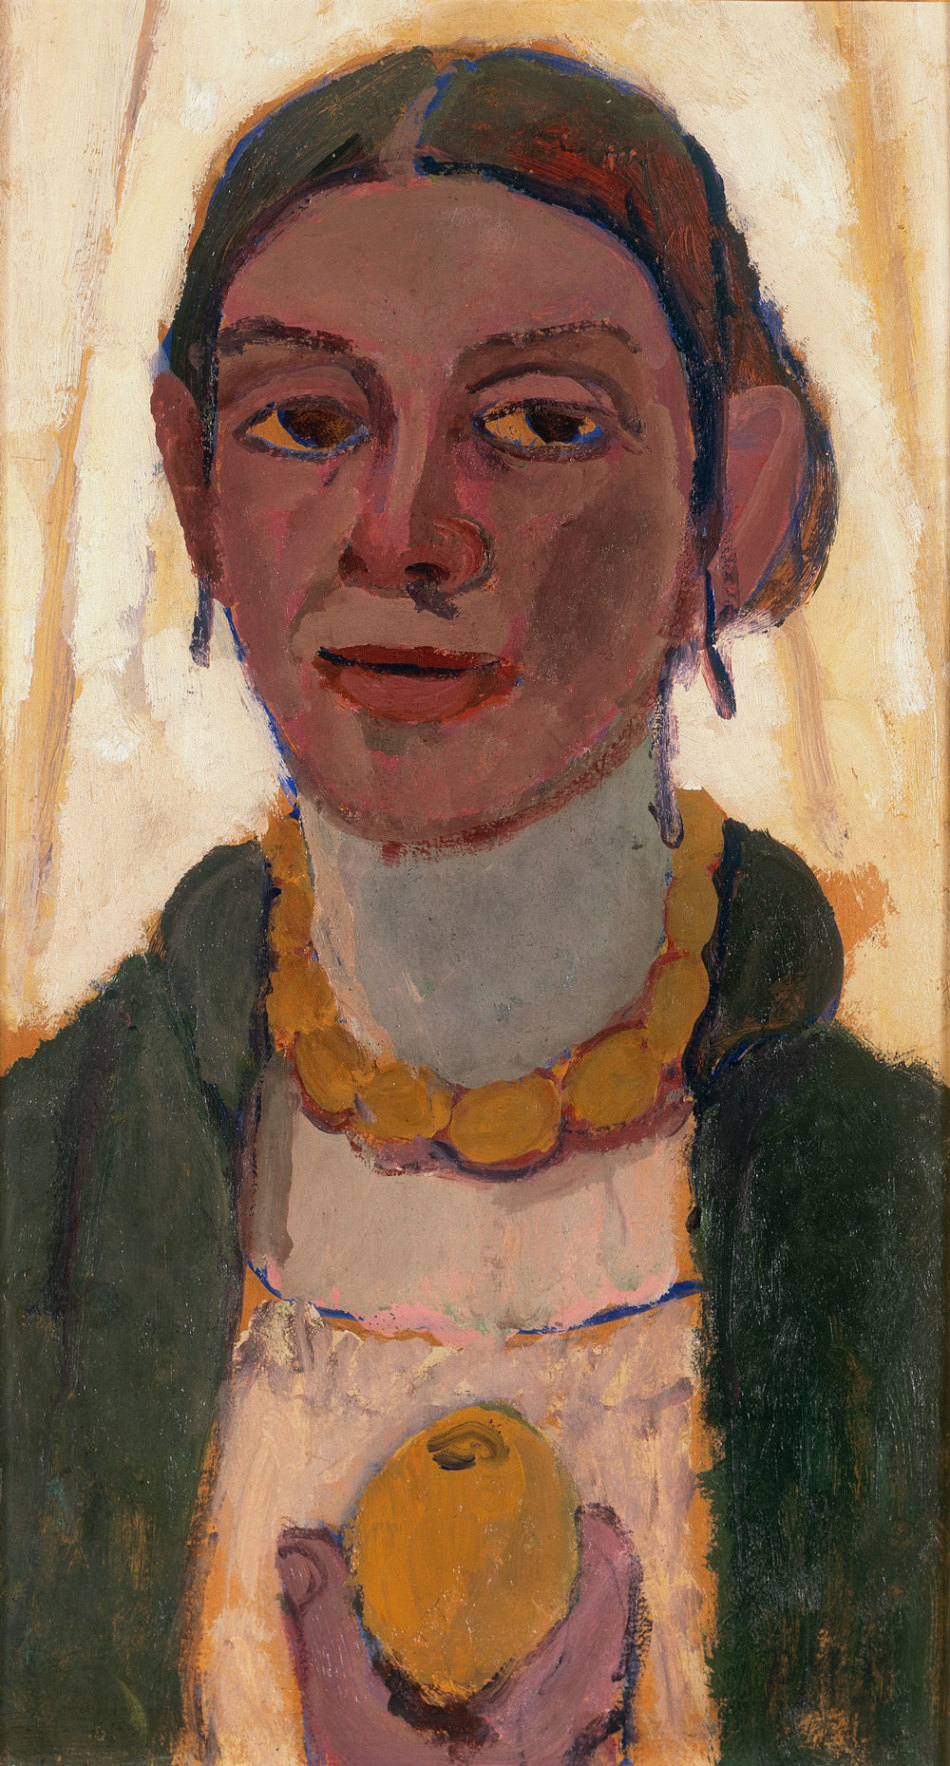 Paula Modersohn-Becker, Self-portrait with Lemon